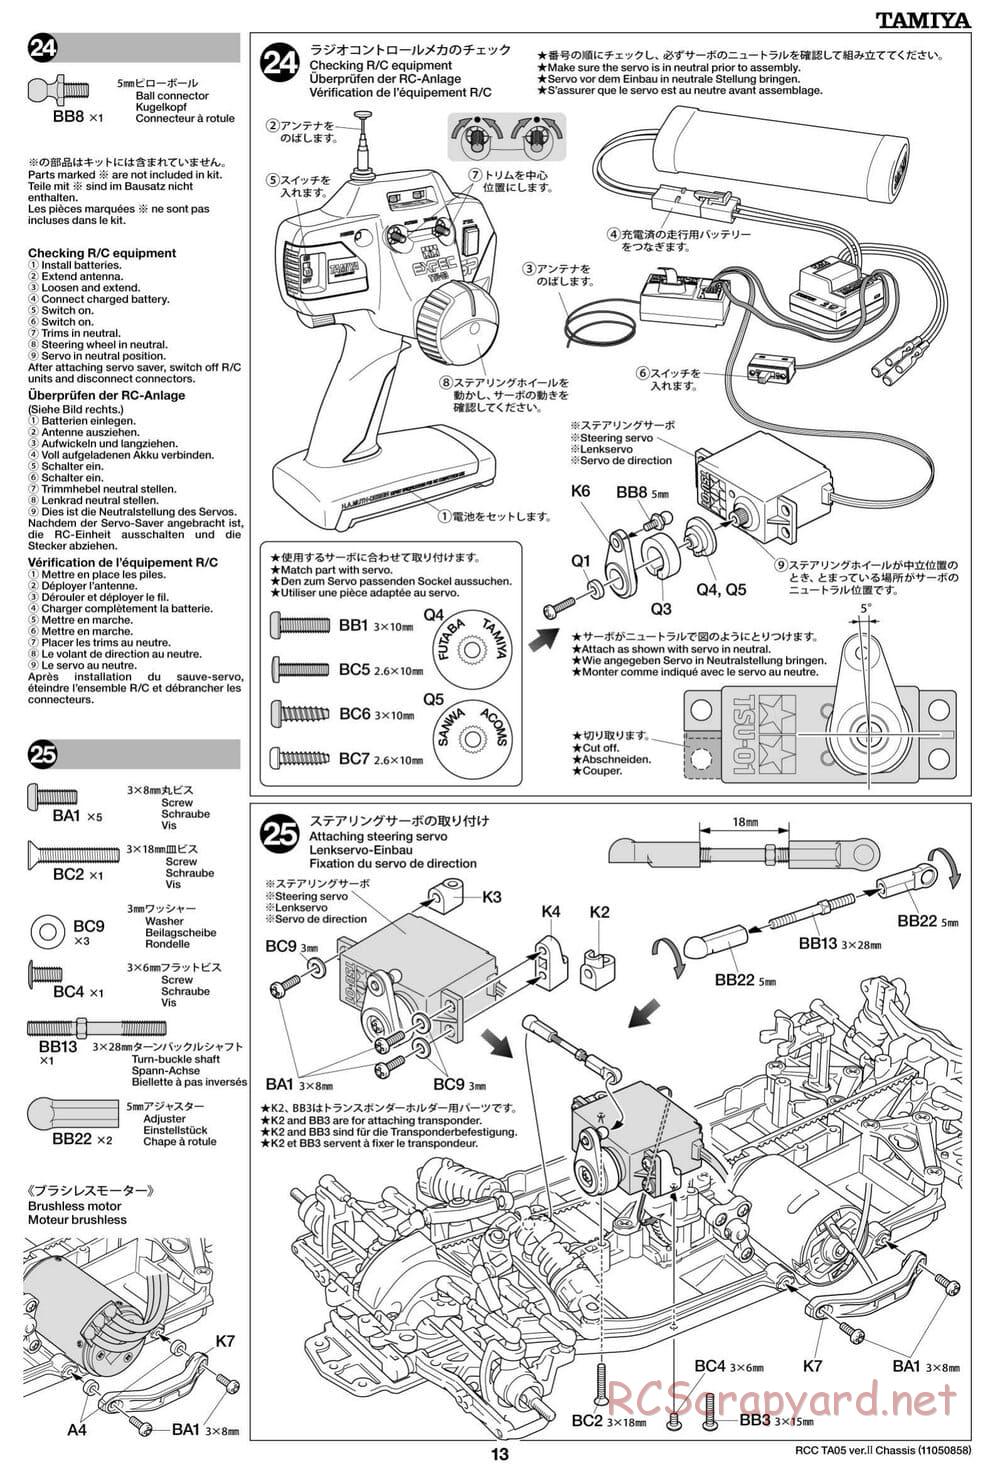 Tamiya - TA05 Ver.II Chassis - Manual - Page 13